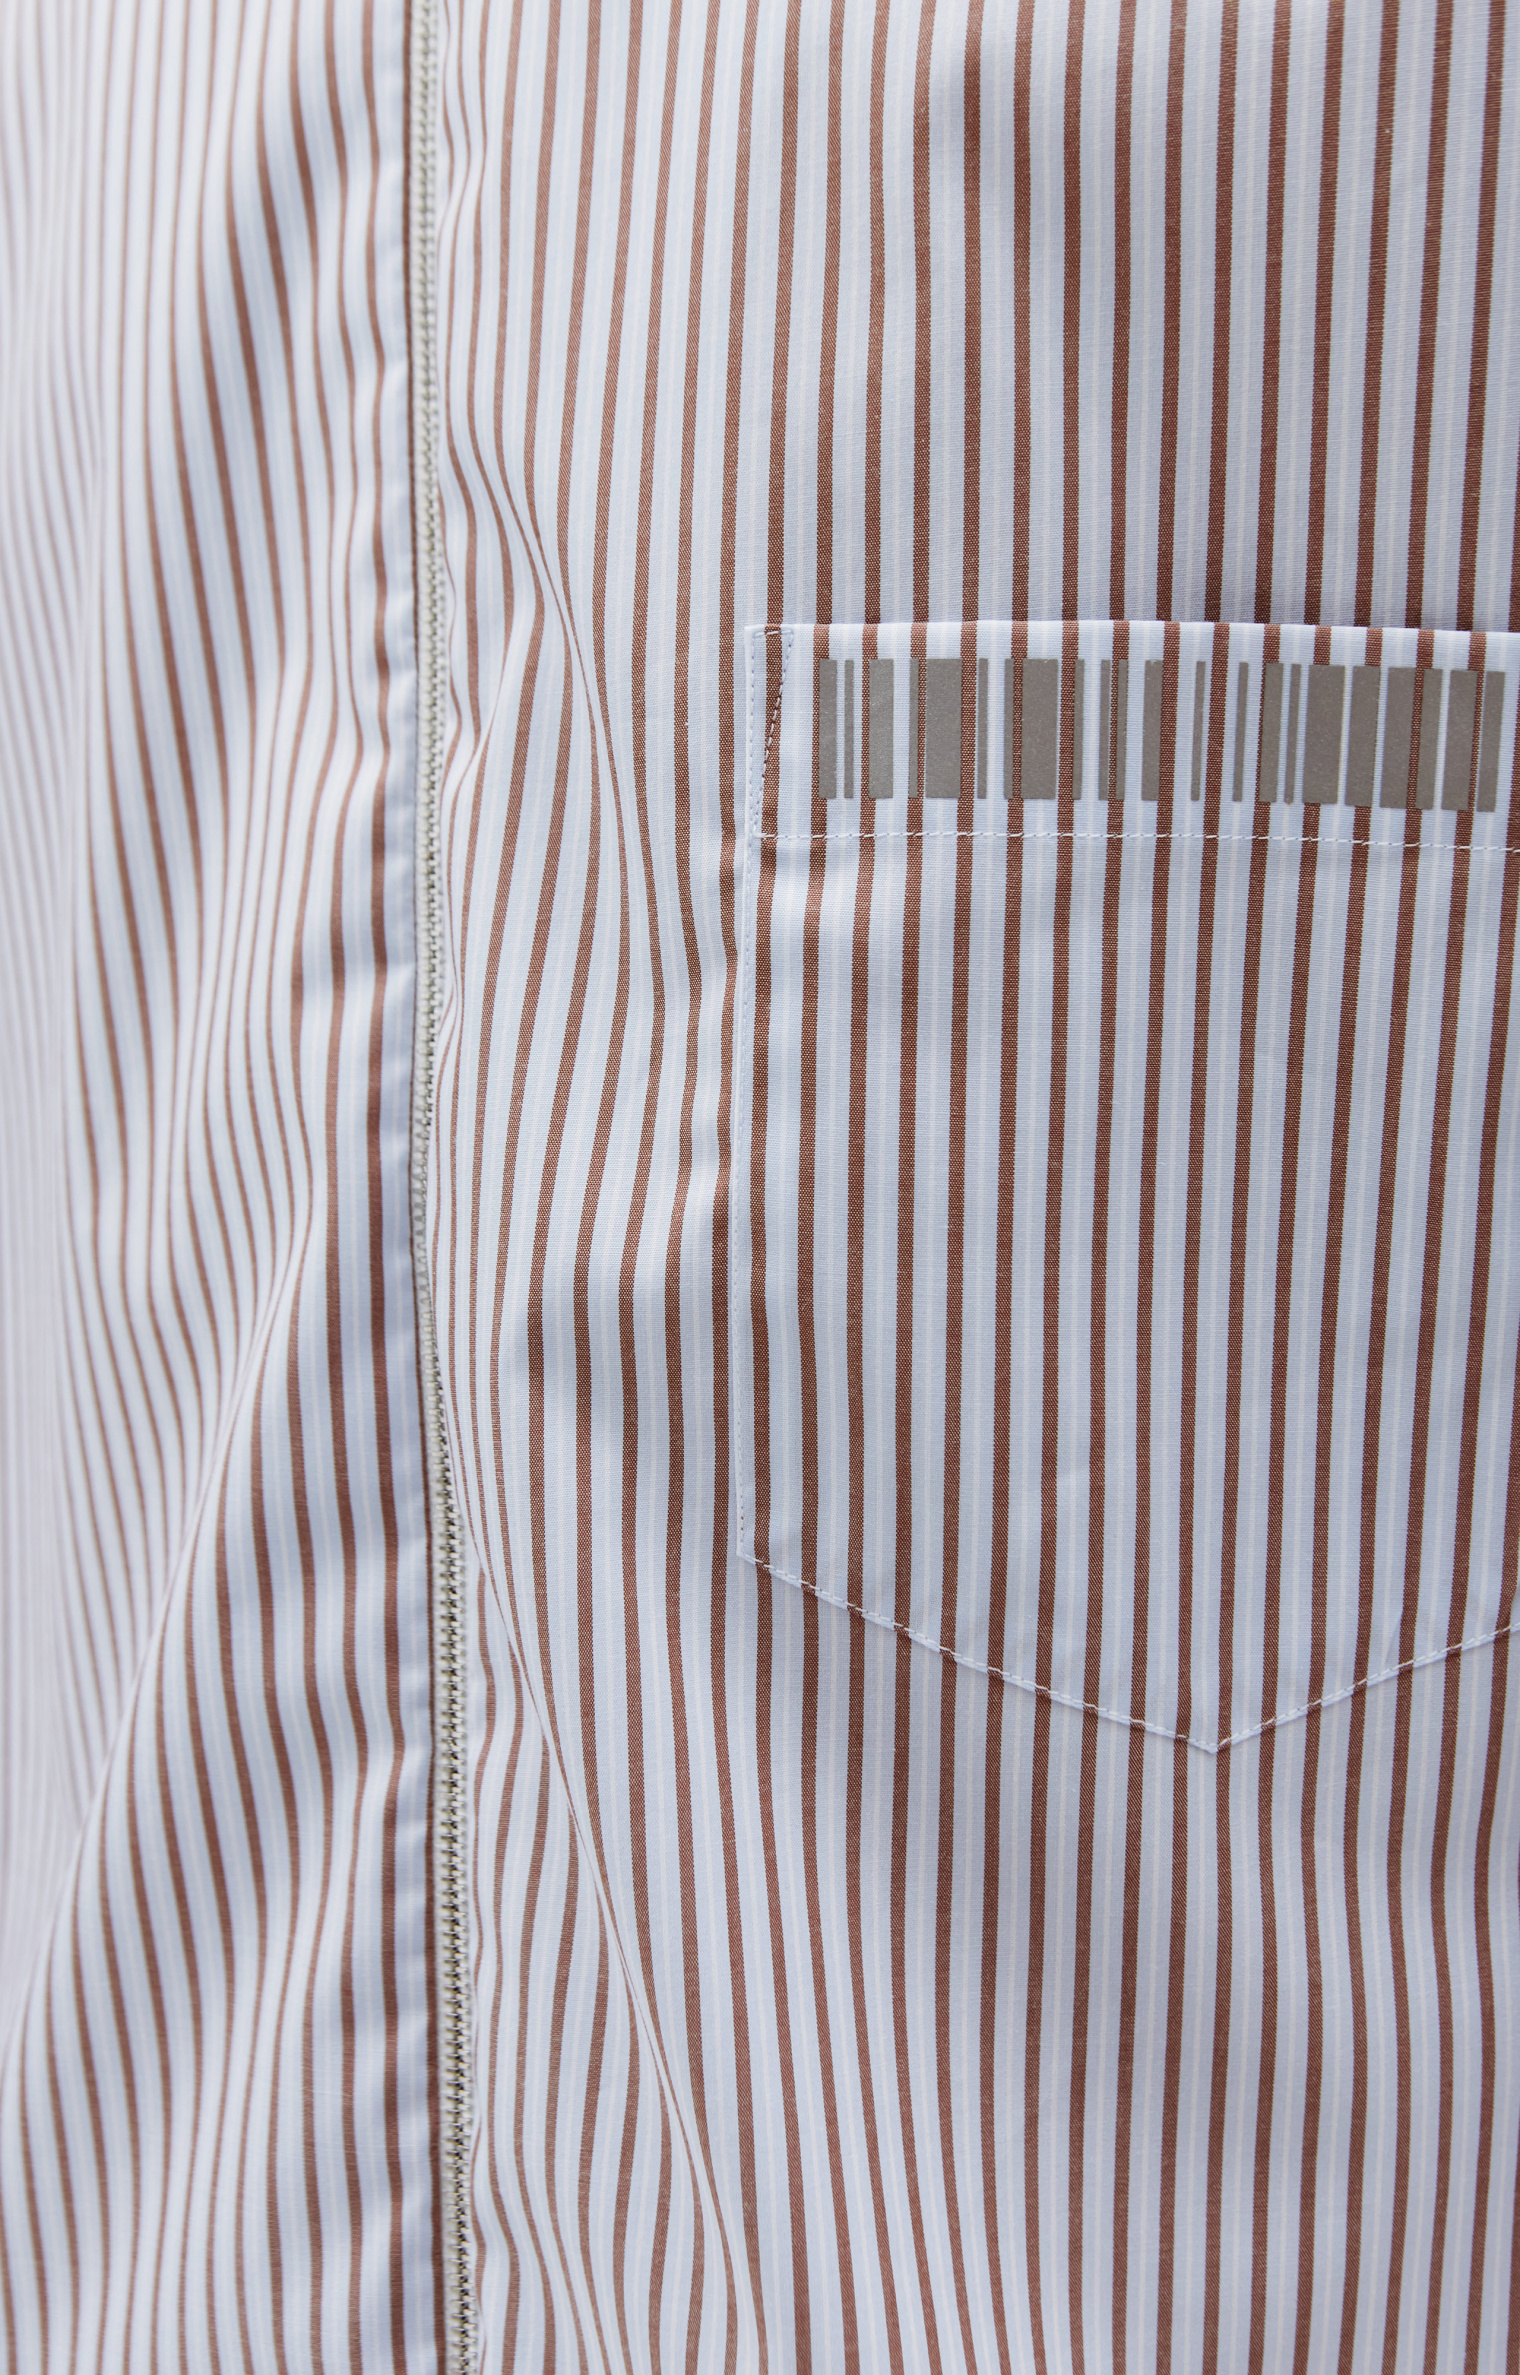 VTMNTS Striped zip-up shirt